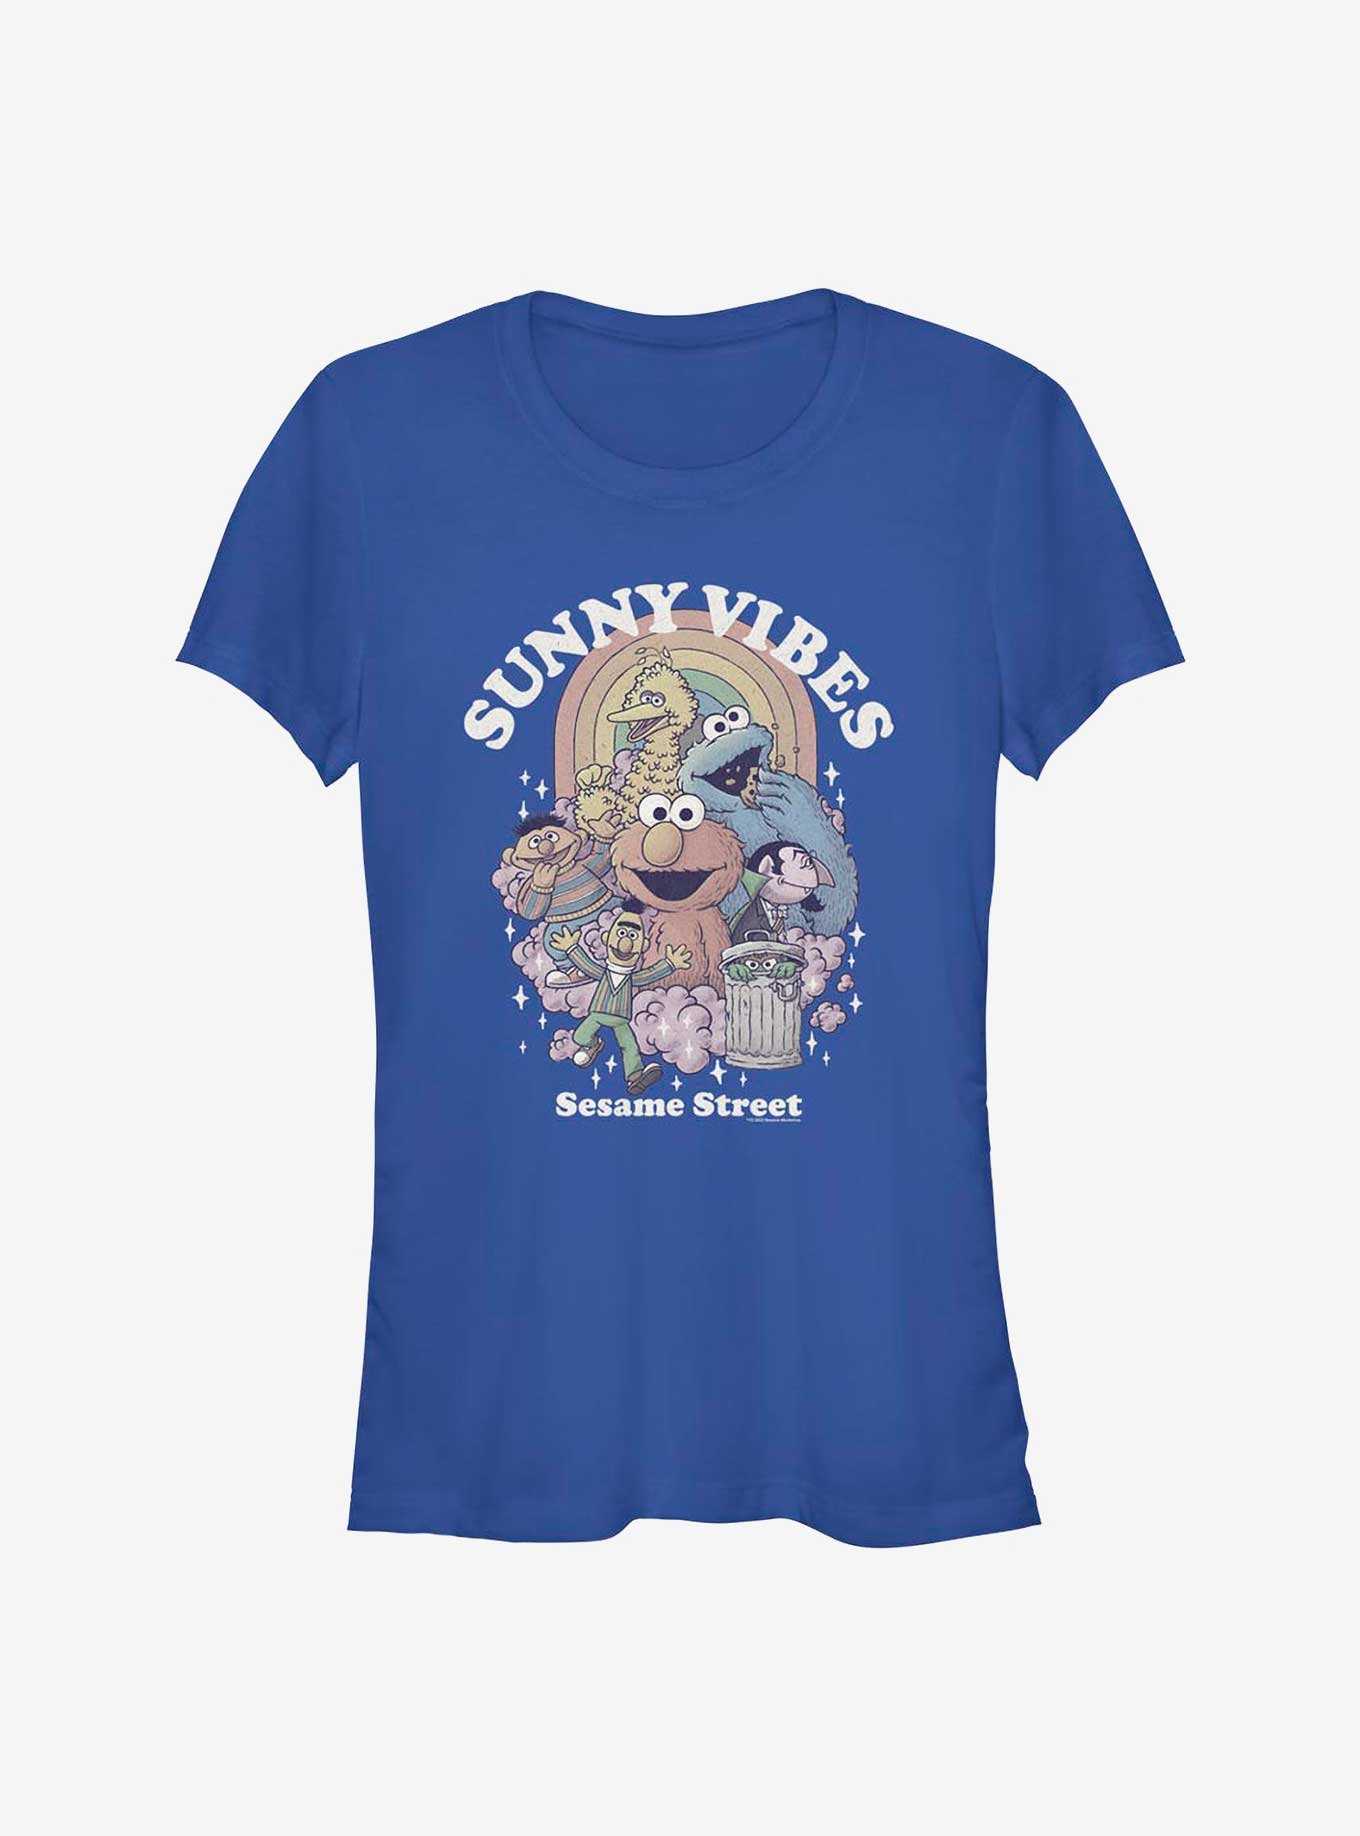 Sesame Street Sunny Vibes Girls T-Shirt, , hi-res